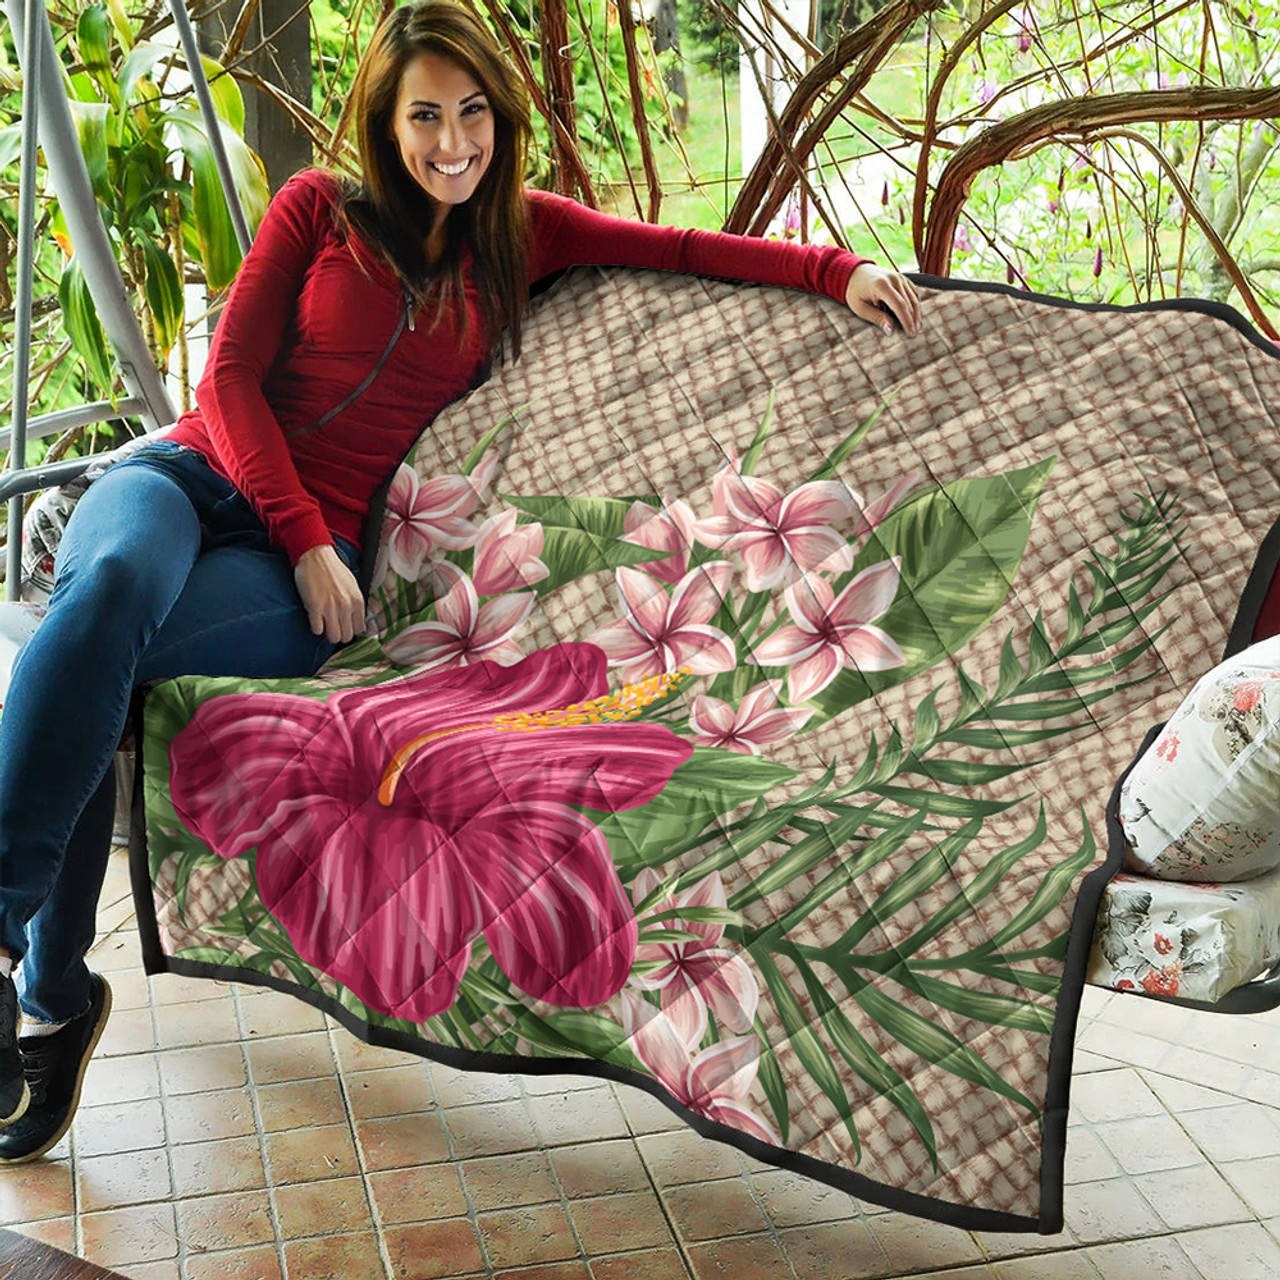 Hawaii Premium Quilt Hibiscus Plumeria Palm Leaves Lauhala Background Polynesian